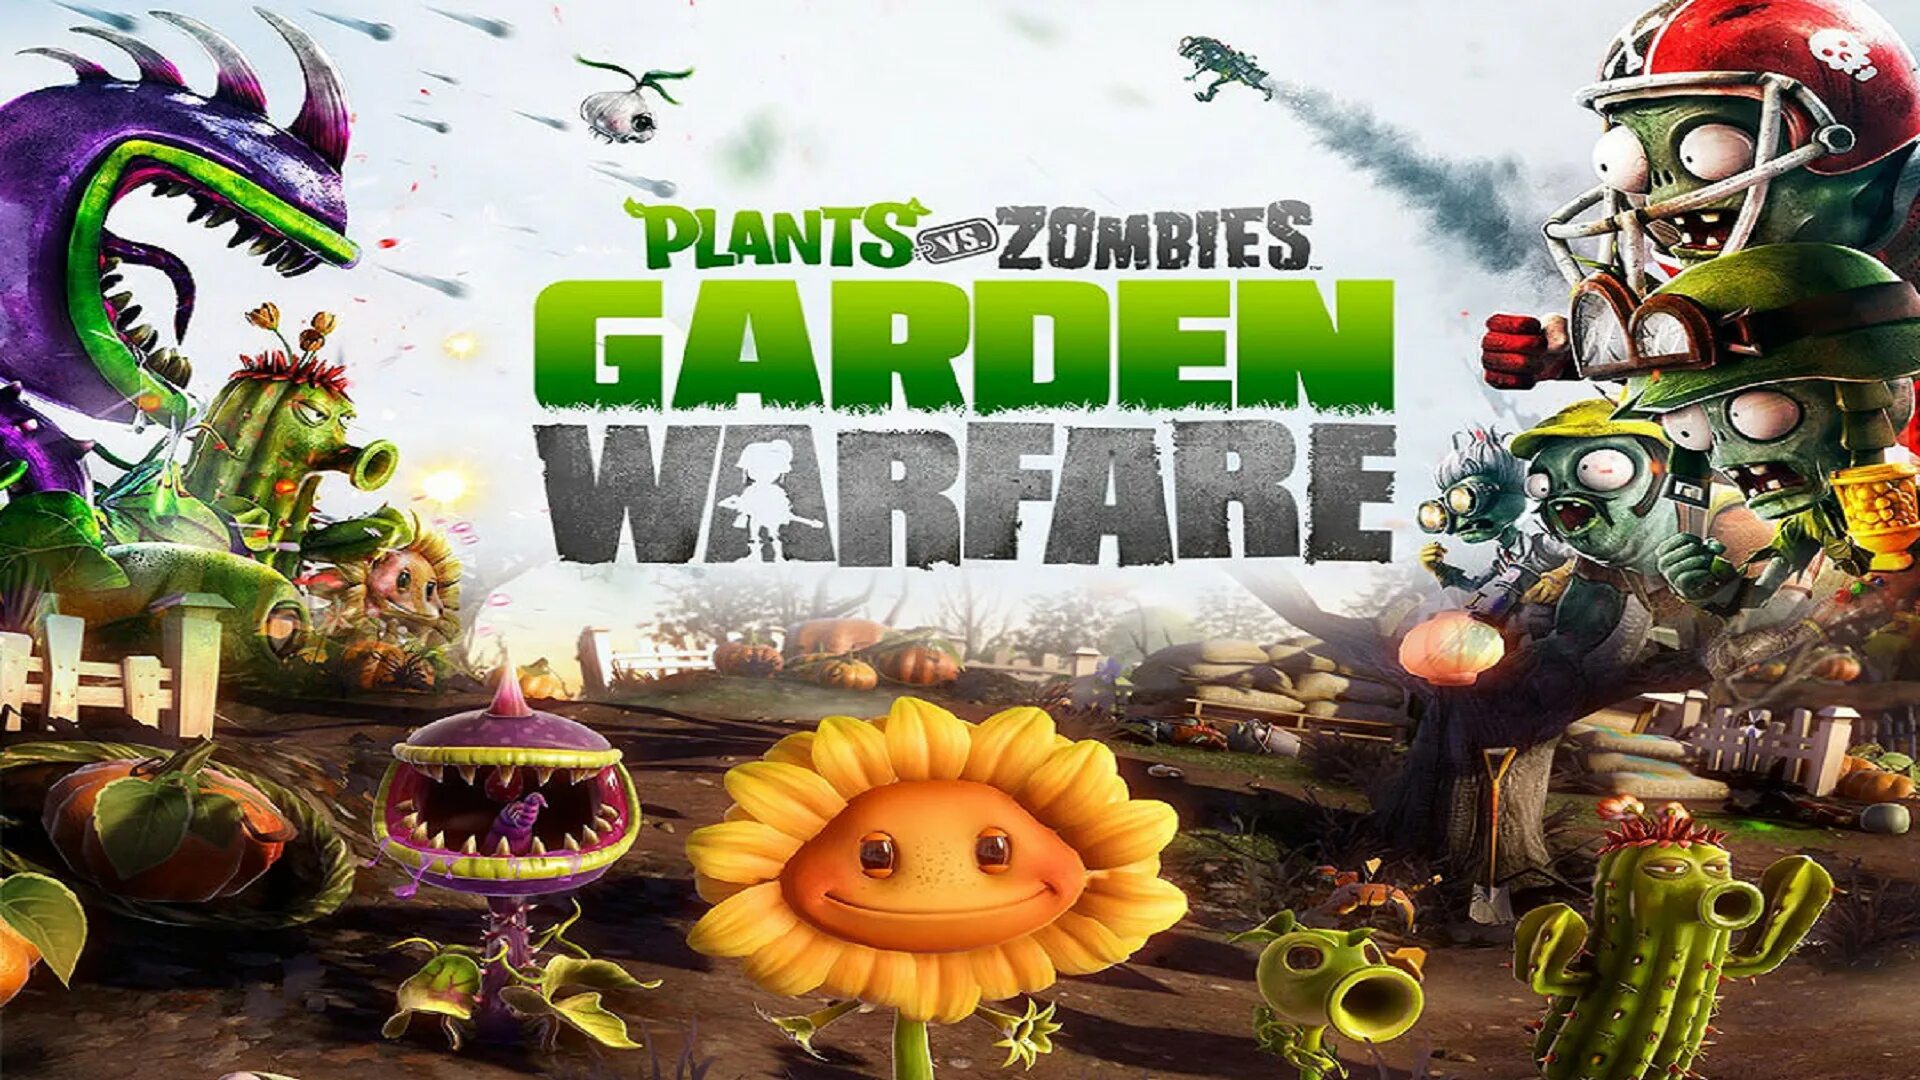 Zombis plants. Plants vs. Zombies игры. Plants vs. Zombies-2009 обложка. Plants vs. Zombies Garden Warfare 2. Plants vs Zombies 1 Постер.